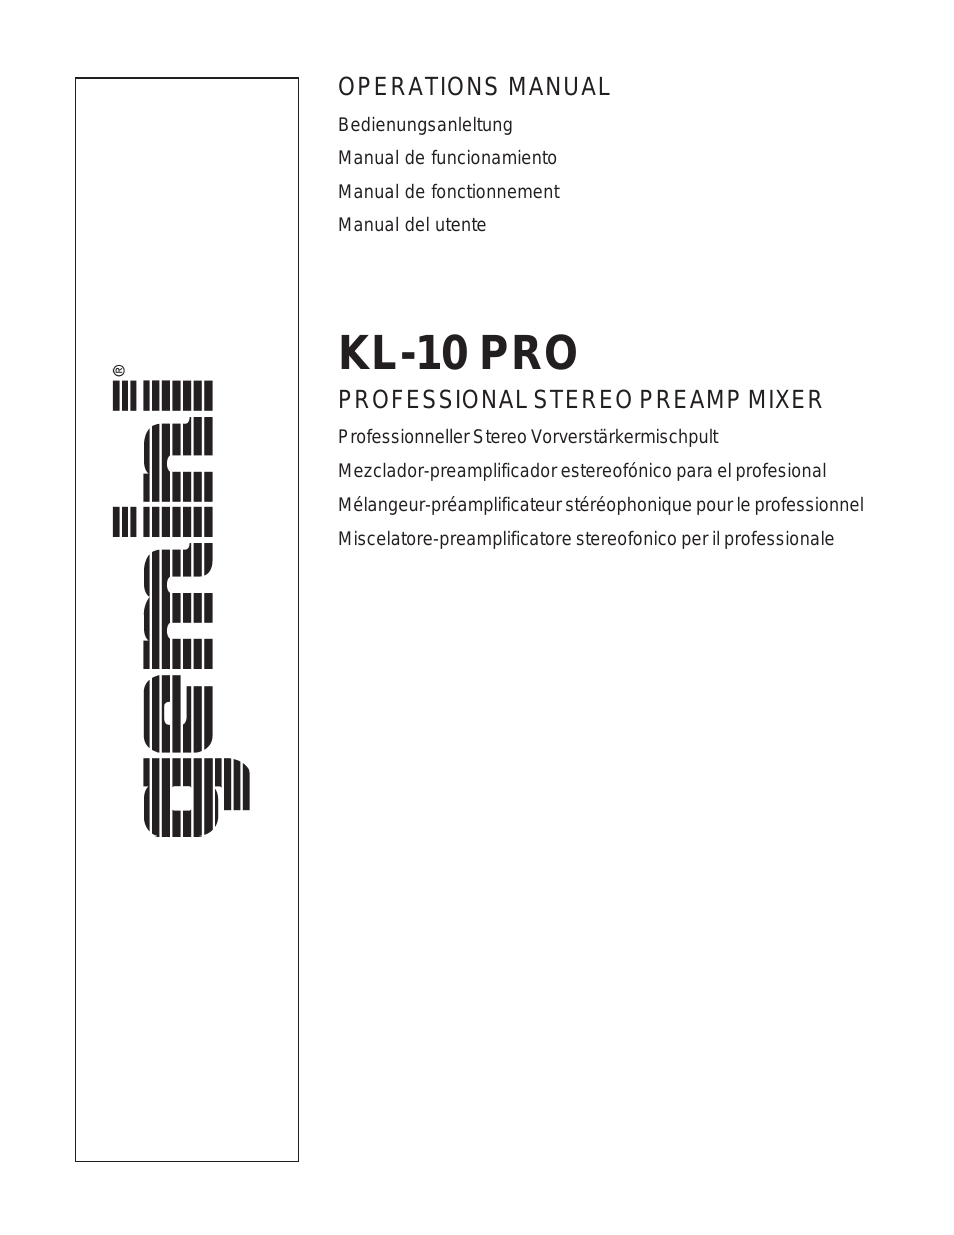 KL-10 PRO